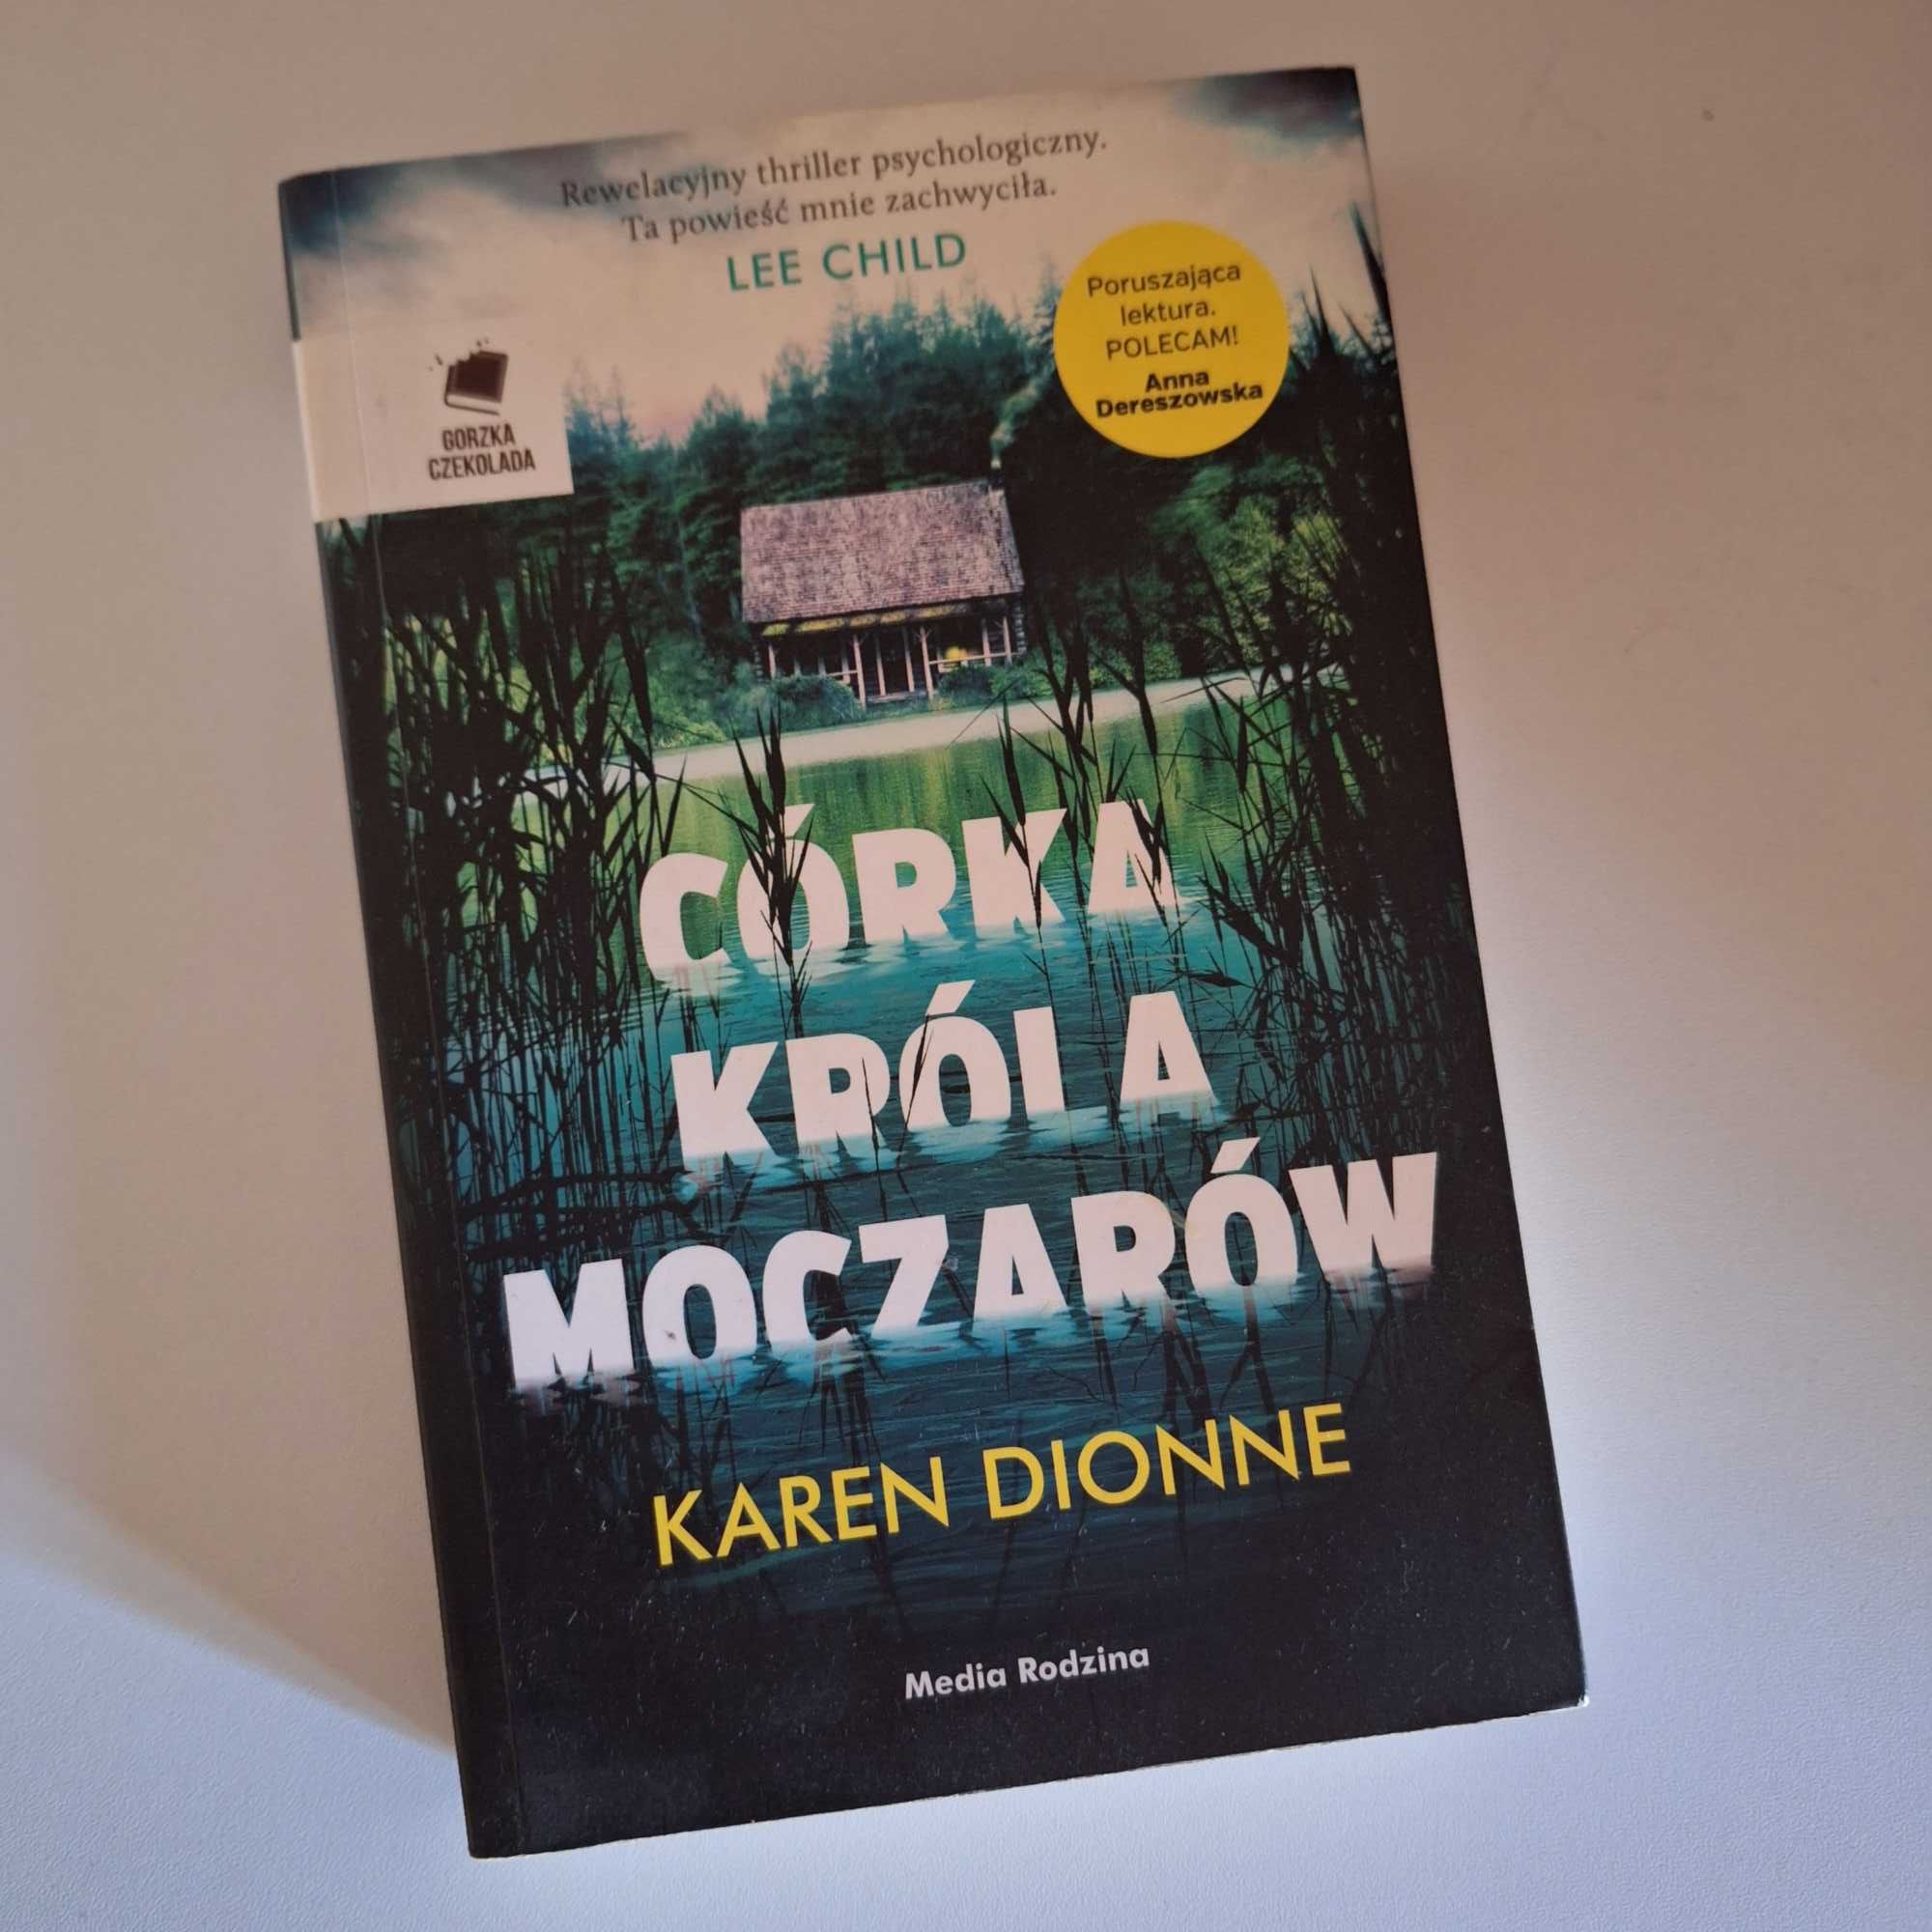 Karen Dionne "Córka króla moczarów" sensacja / thriller